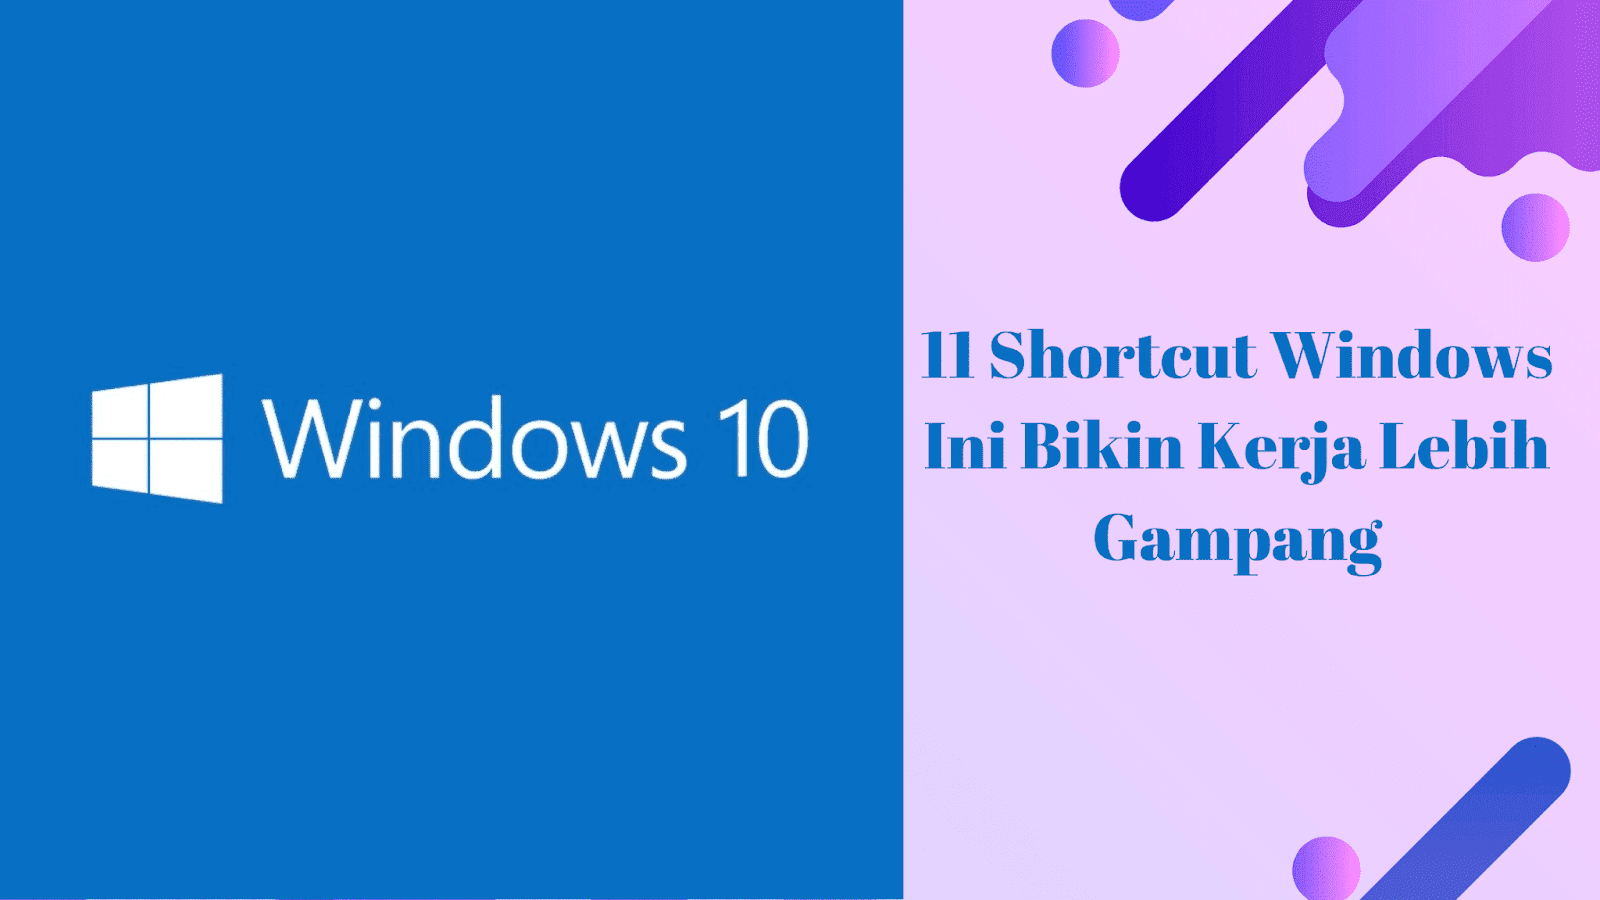 11 Shortcut Windows Ini Bikin Kerja Lebih Gampang